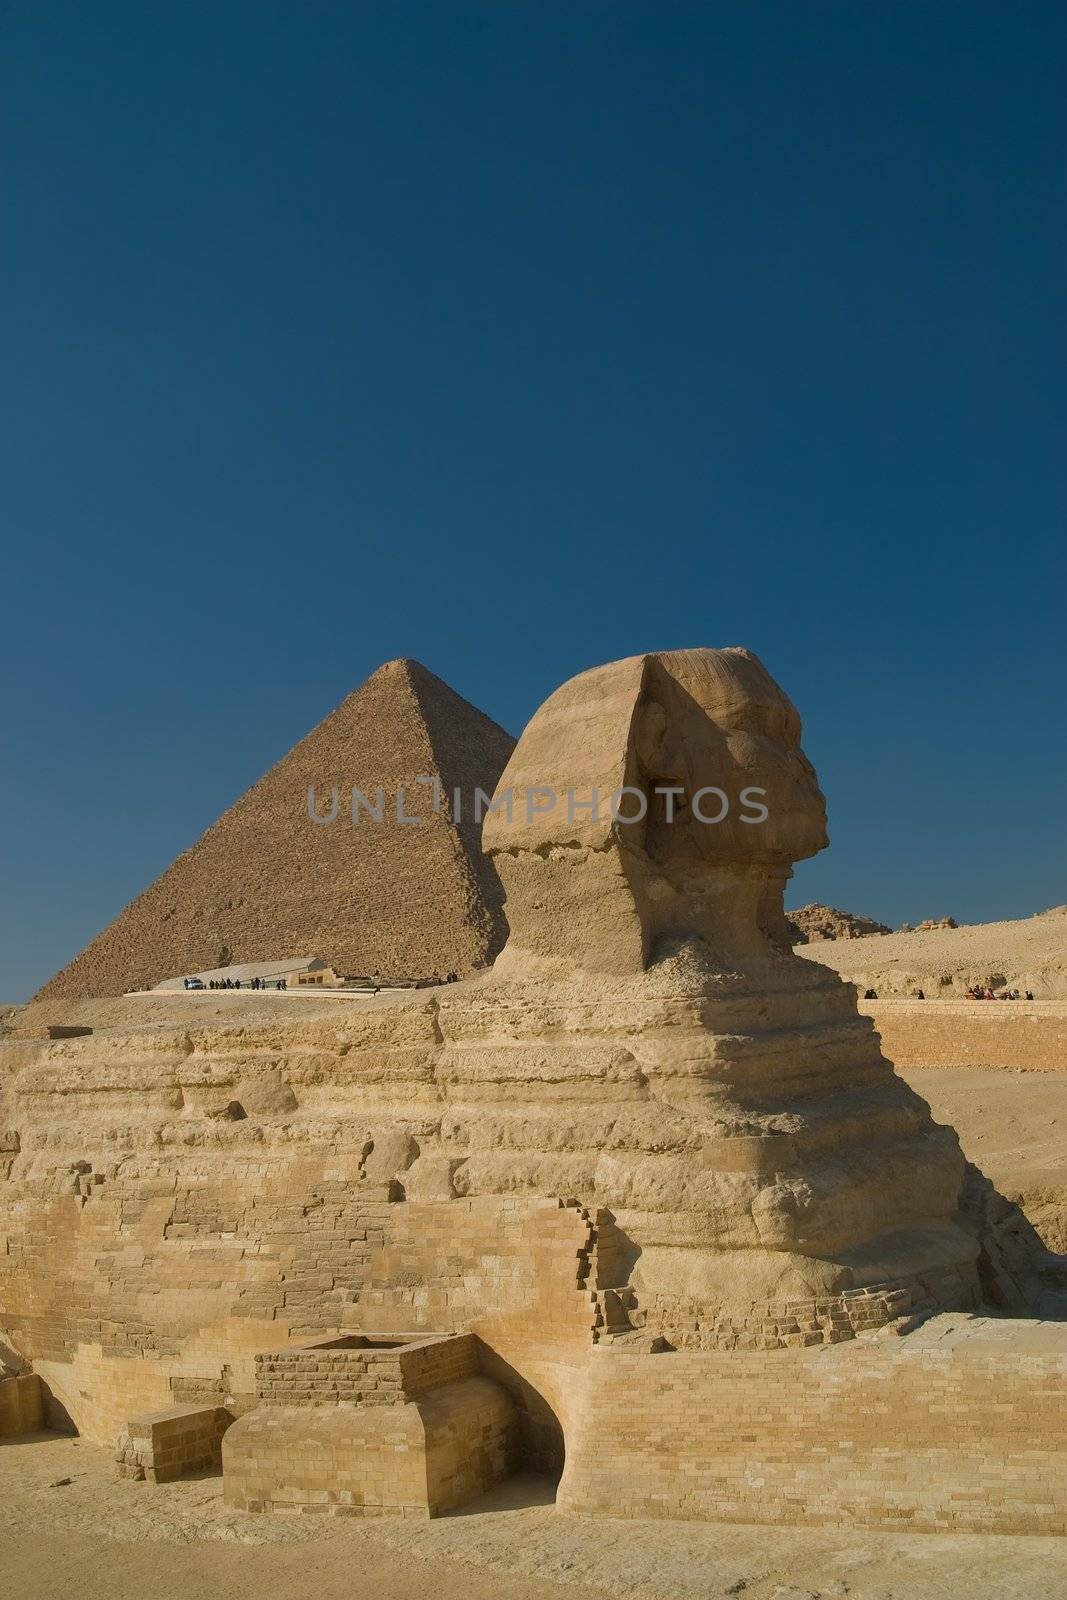 Sphinx and pyramid by camerziga